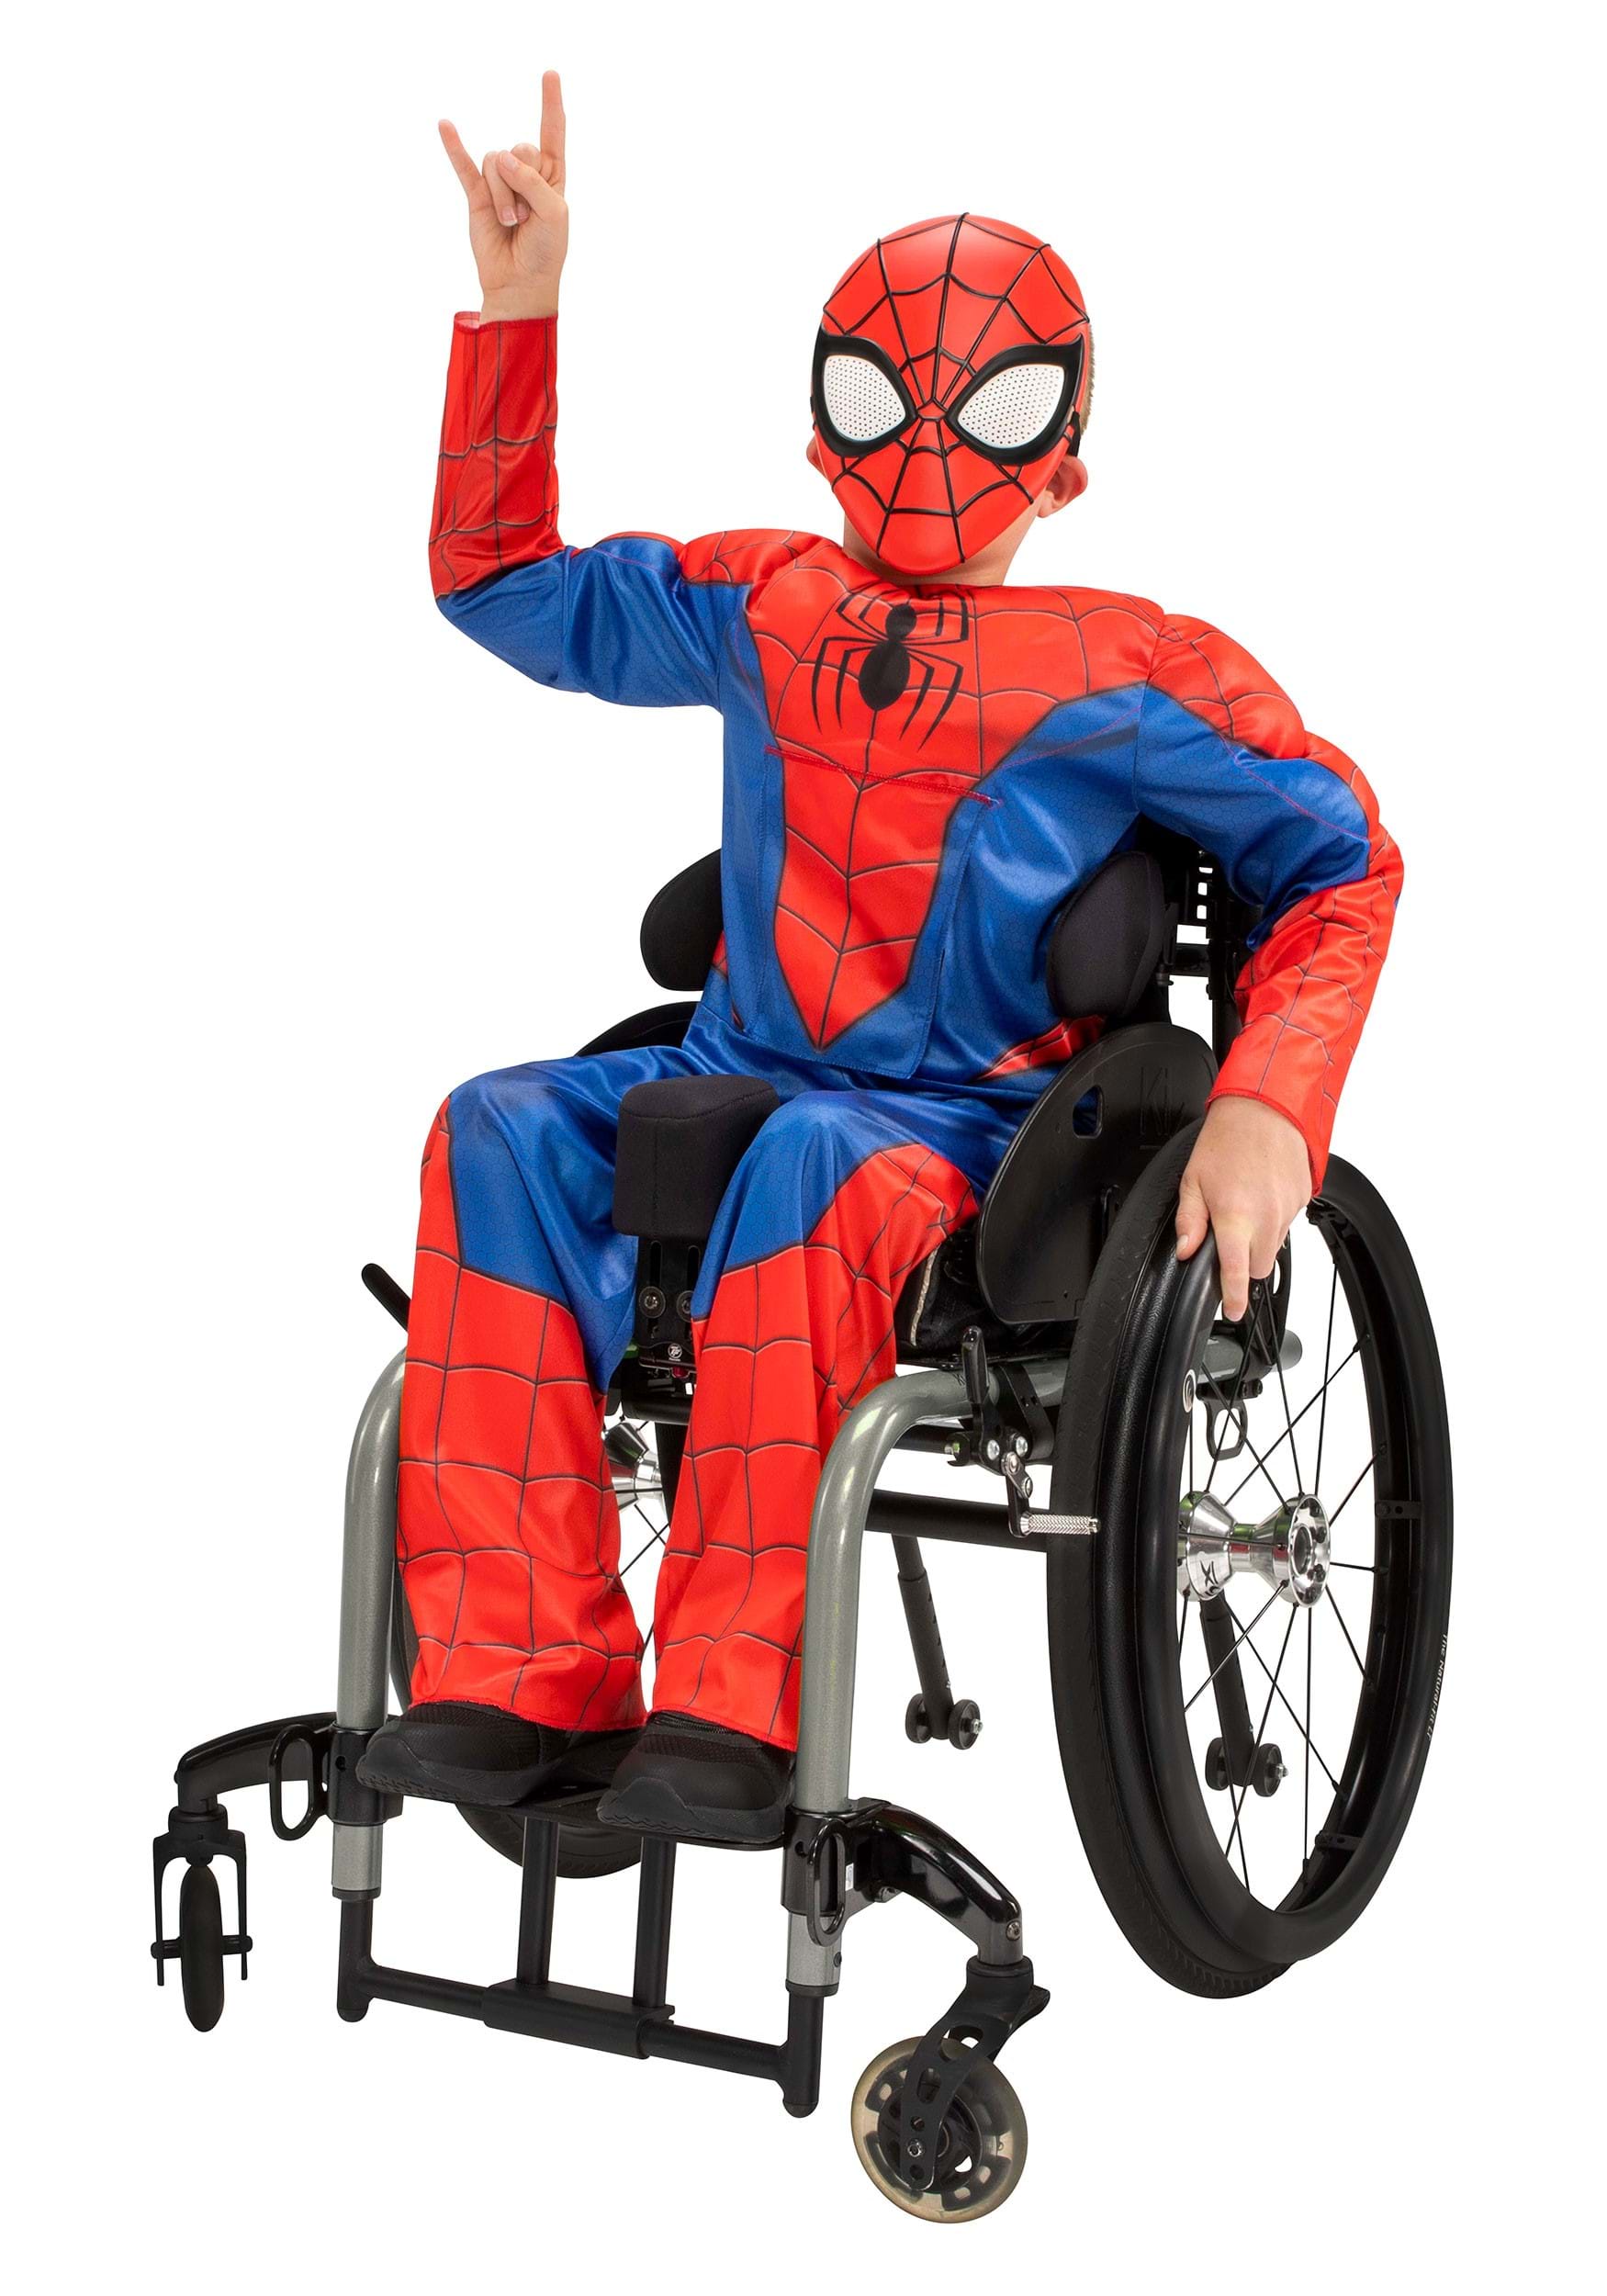 Adaptive Kid's Spider-Man Costume